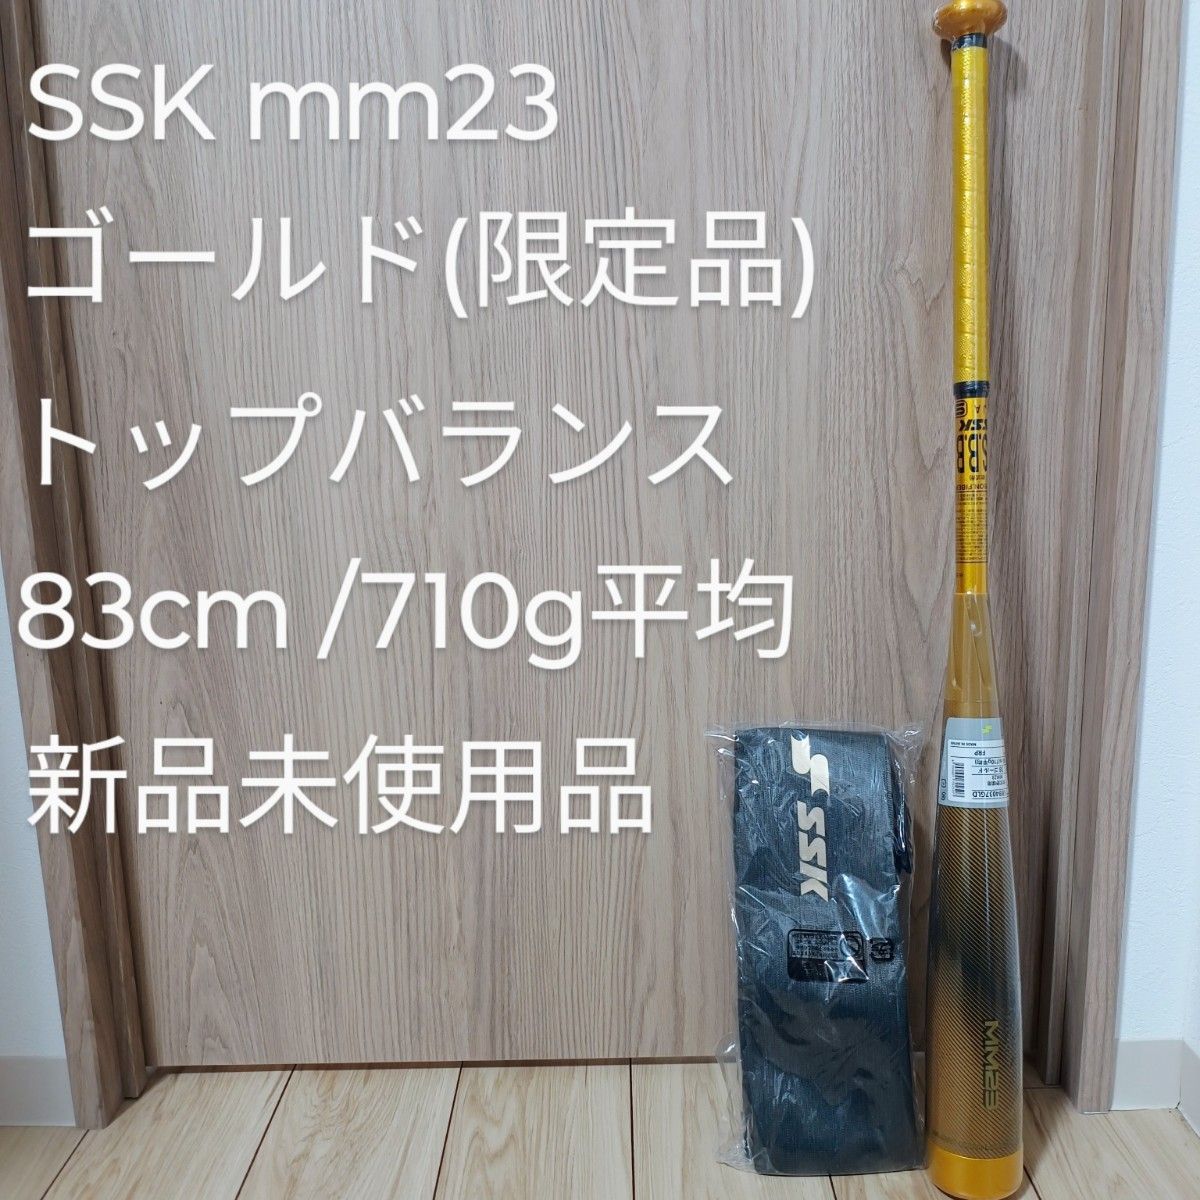 SSK MM23 ゴールド トップバランス 83cm  710g平均 新品未使用品 軟式野球 バット